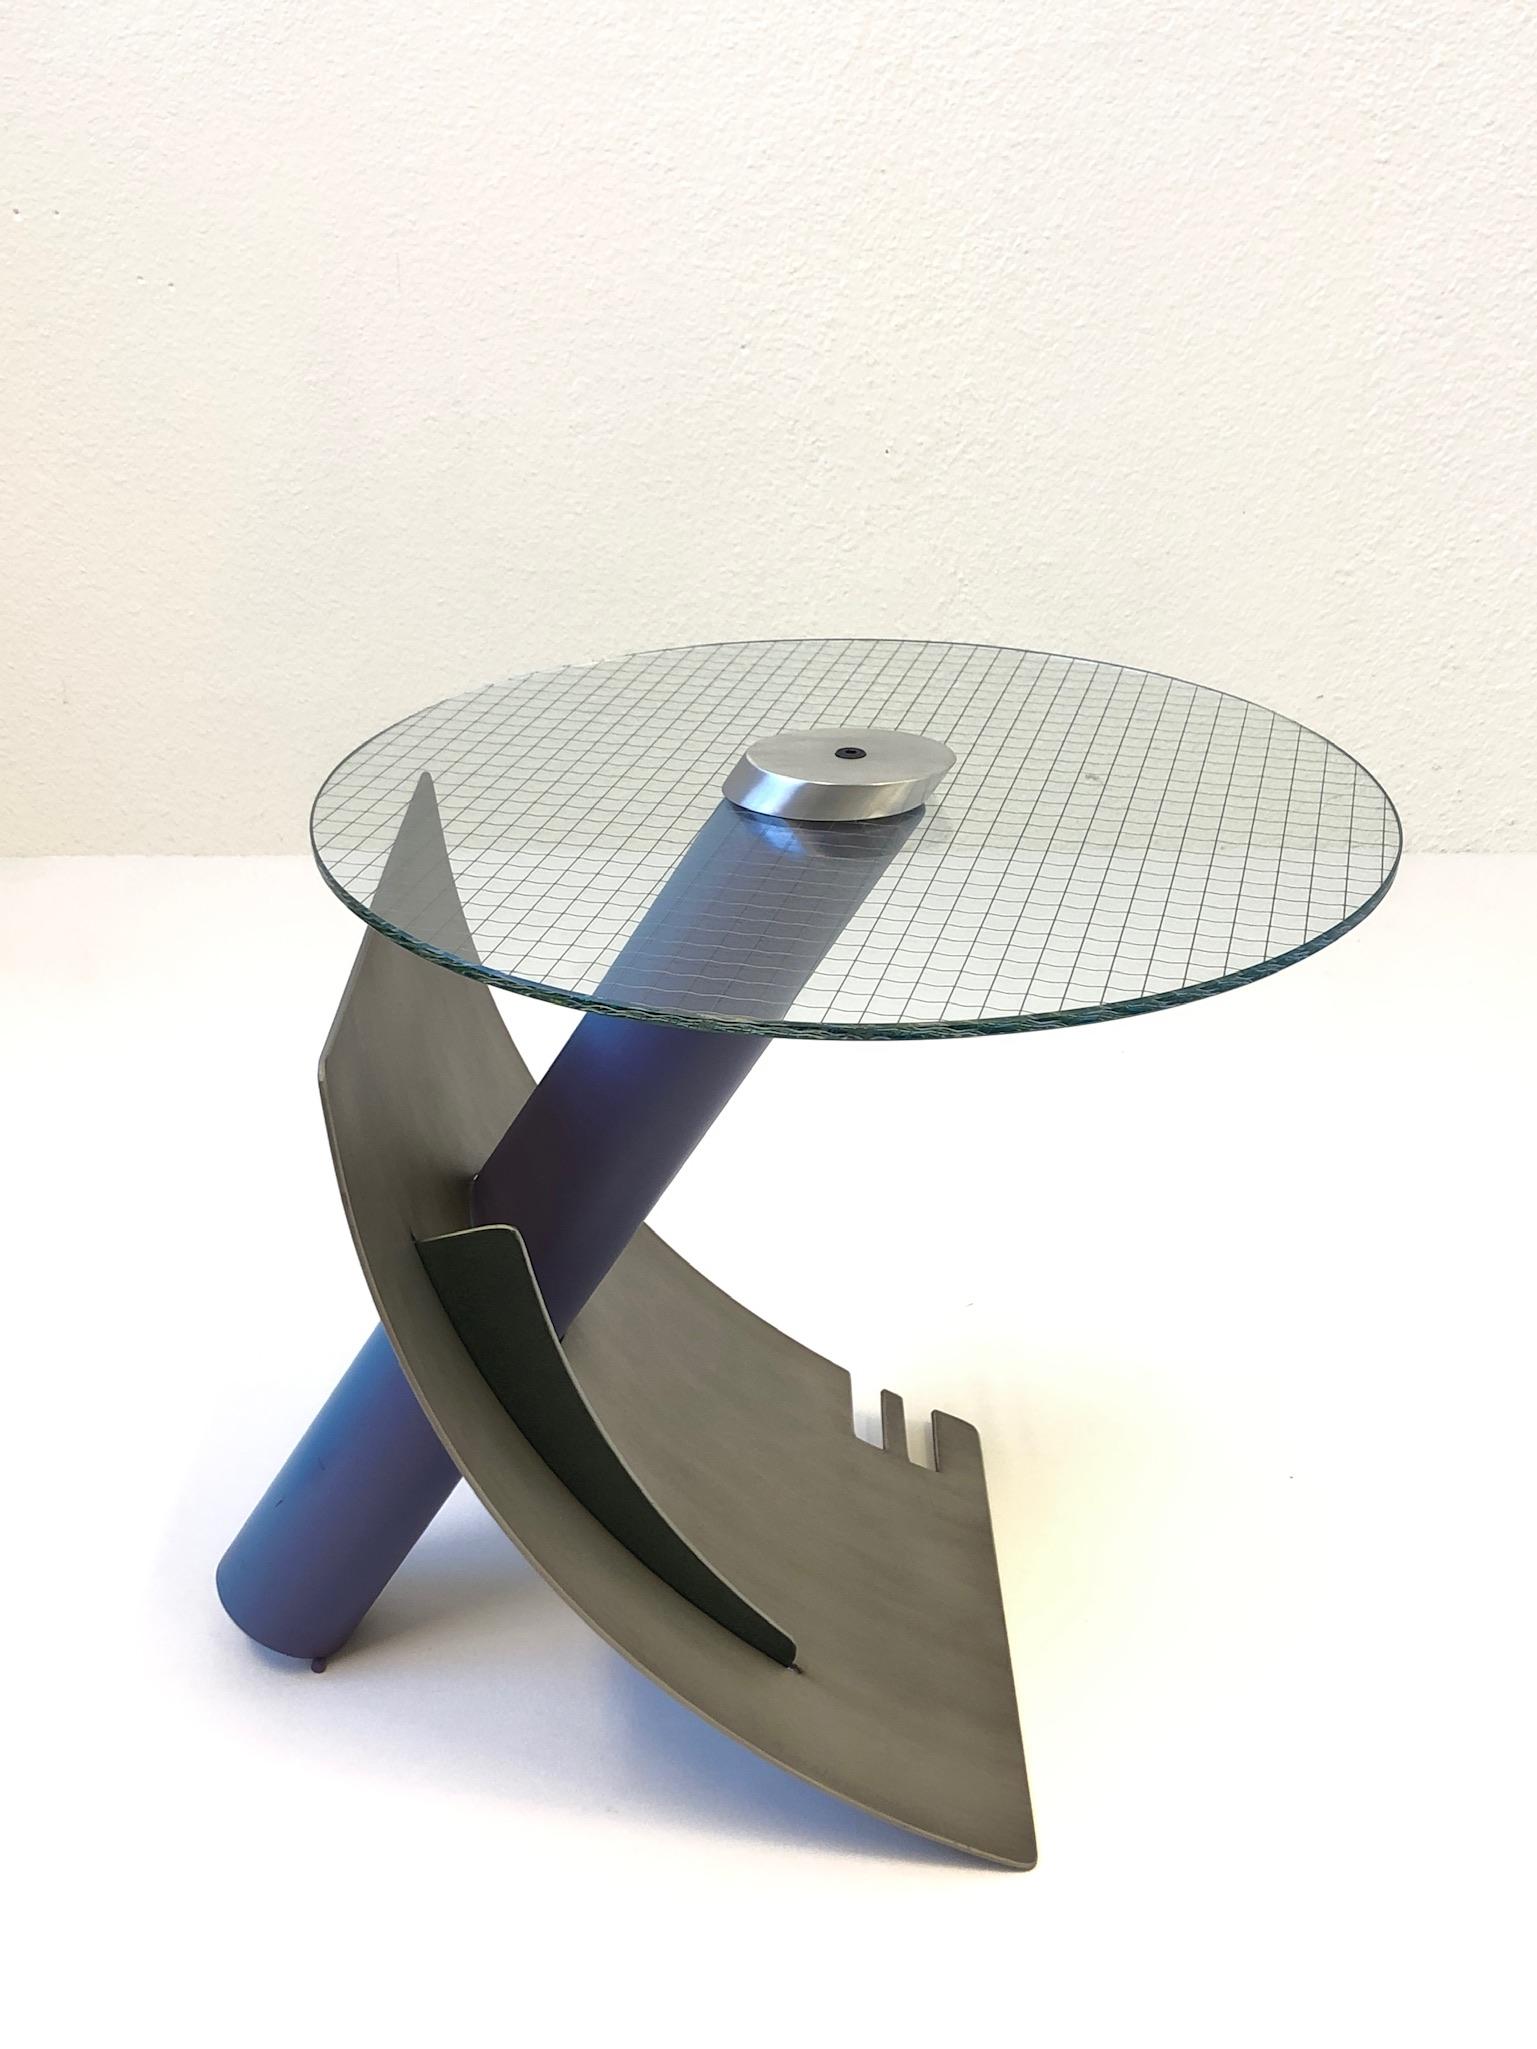 American Studio Postmodern Steel and Glass Side Table by Michael Graham